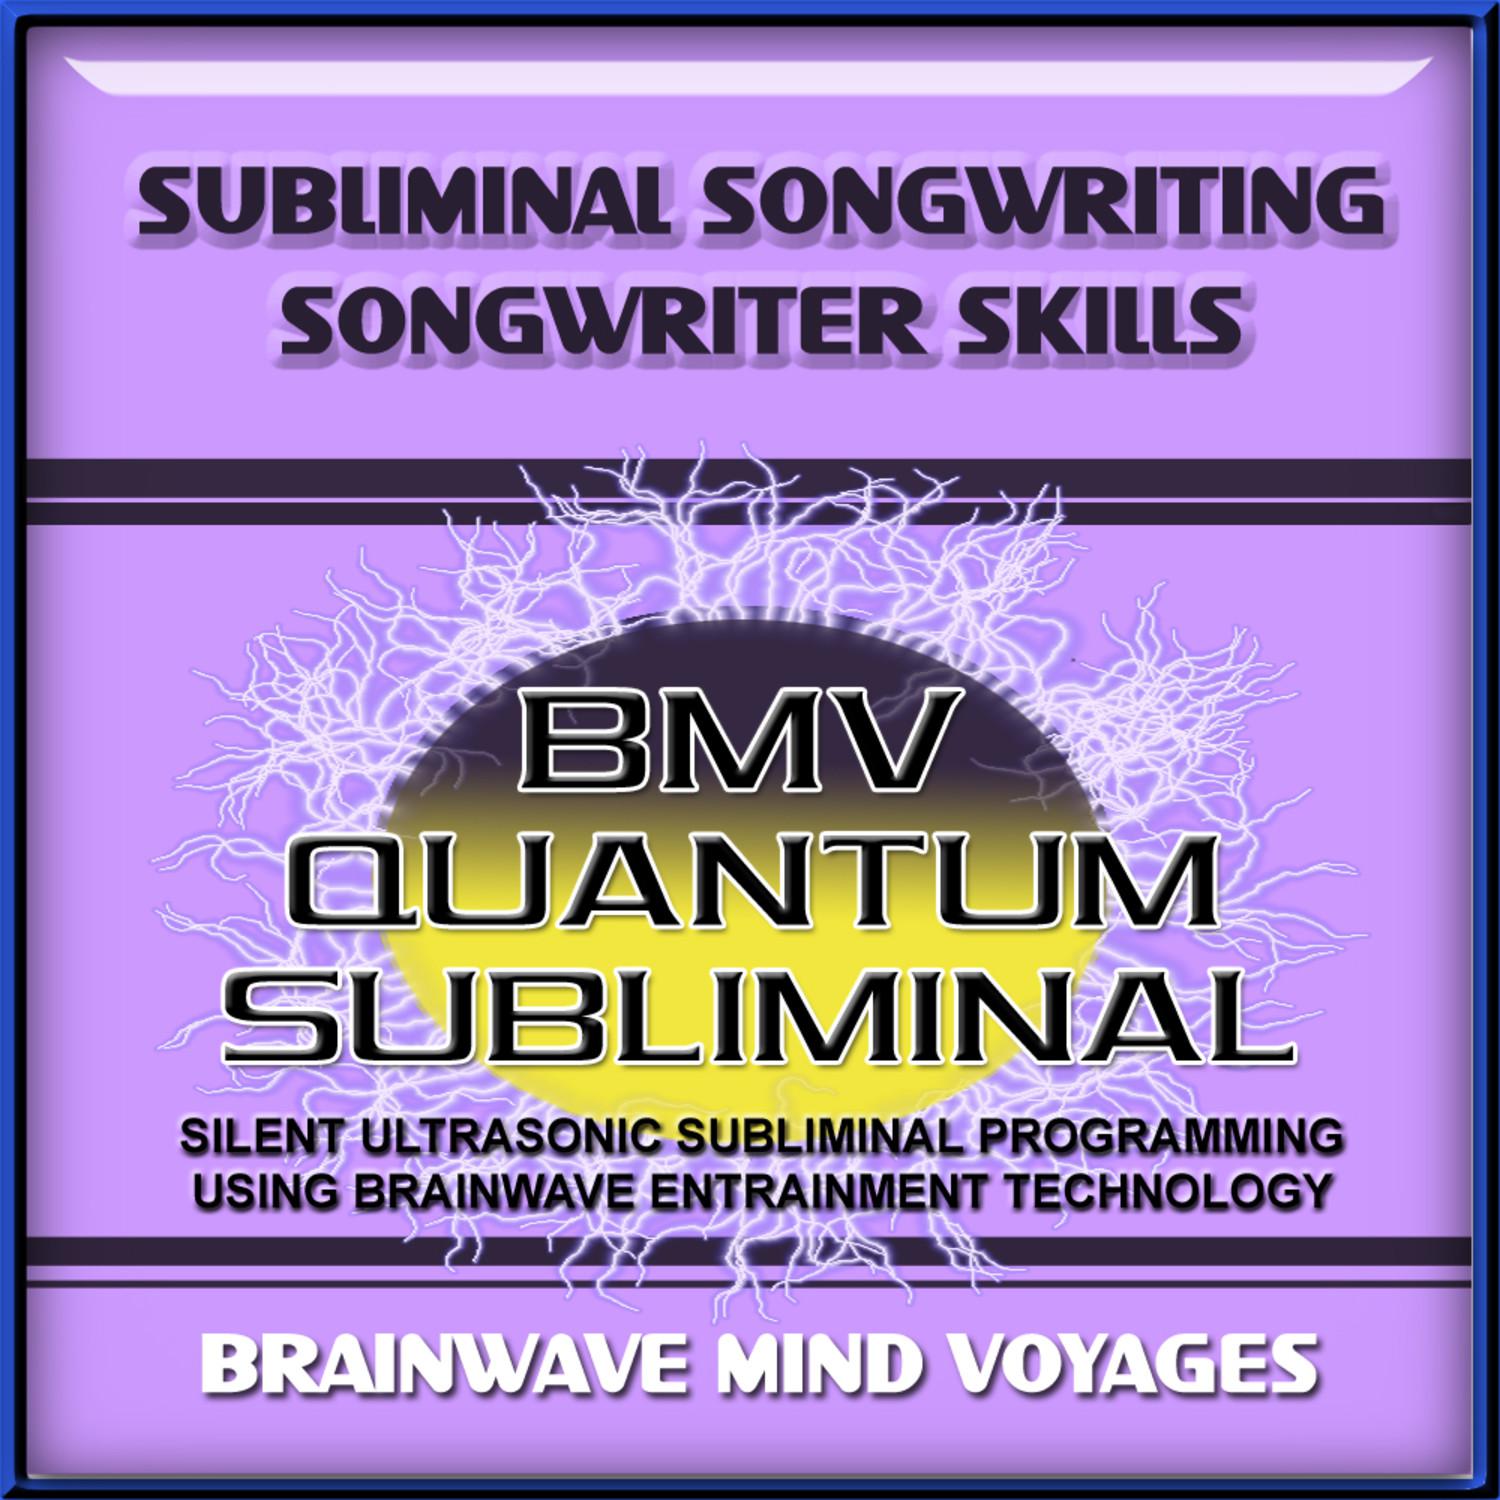 Subliminal Songwriting Songwriter Skills - Silent Ultrasonic Track